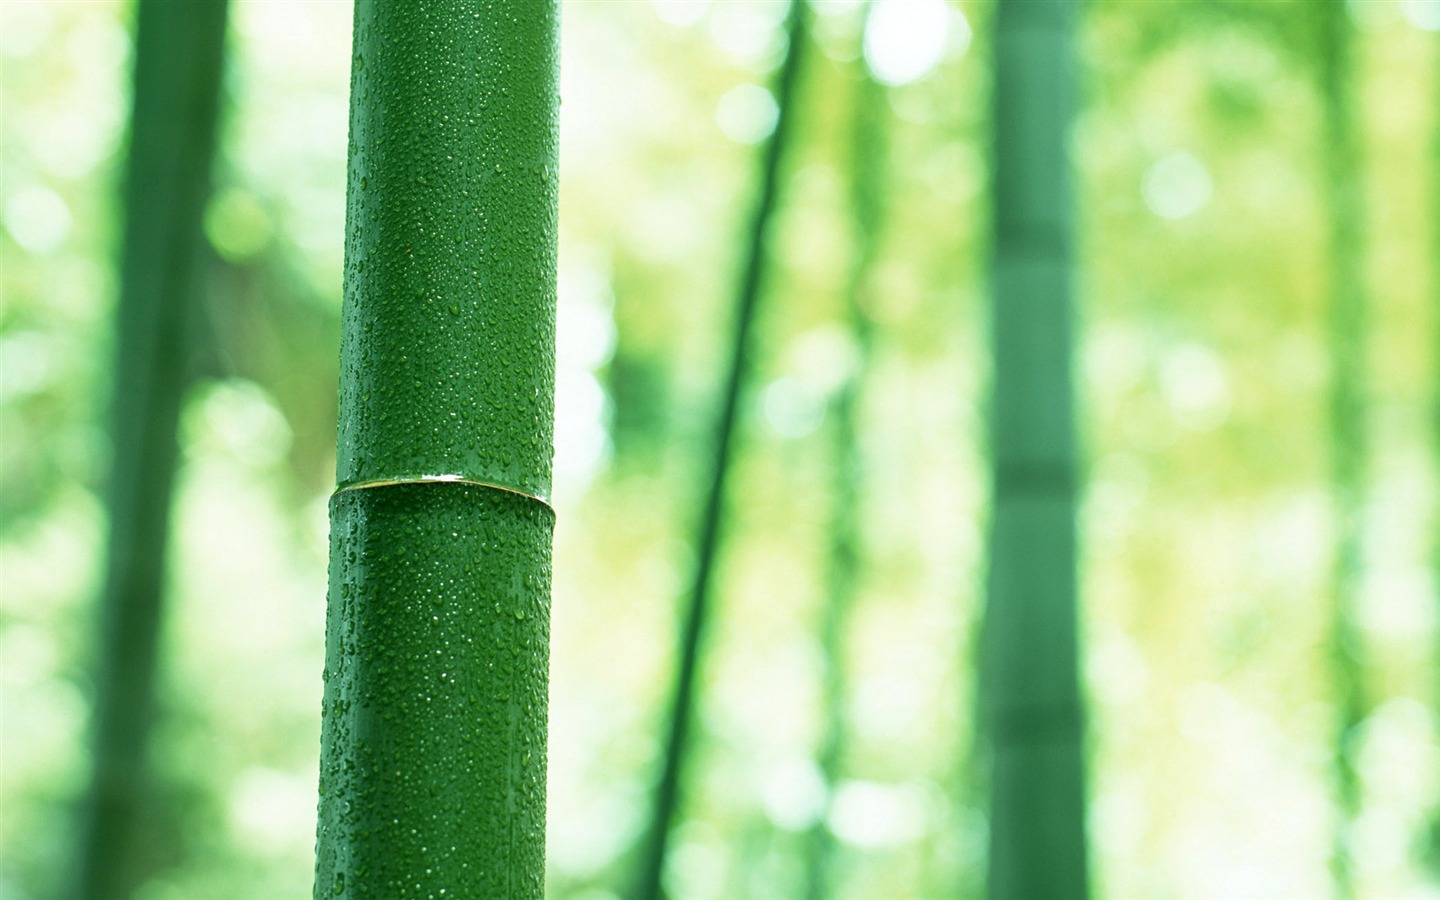 Fond d'écran de bambou vert albums #3 - 1440x900